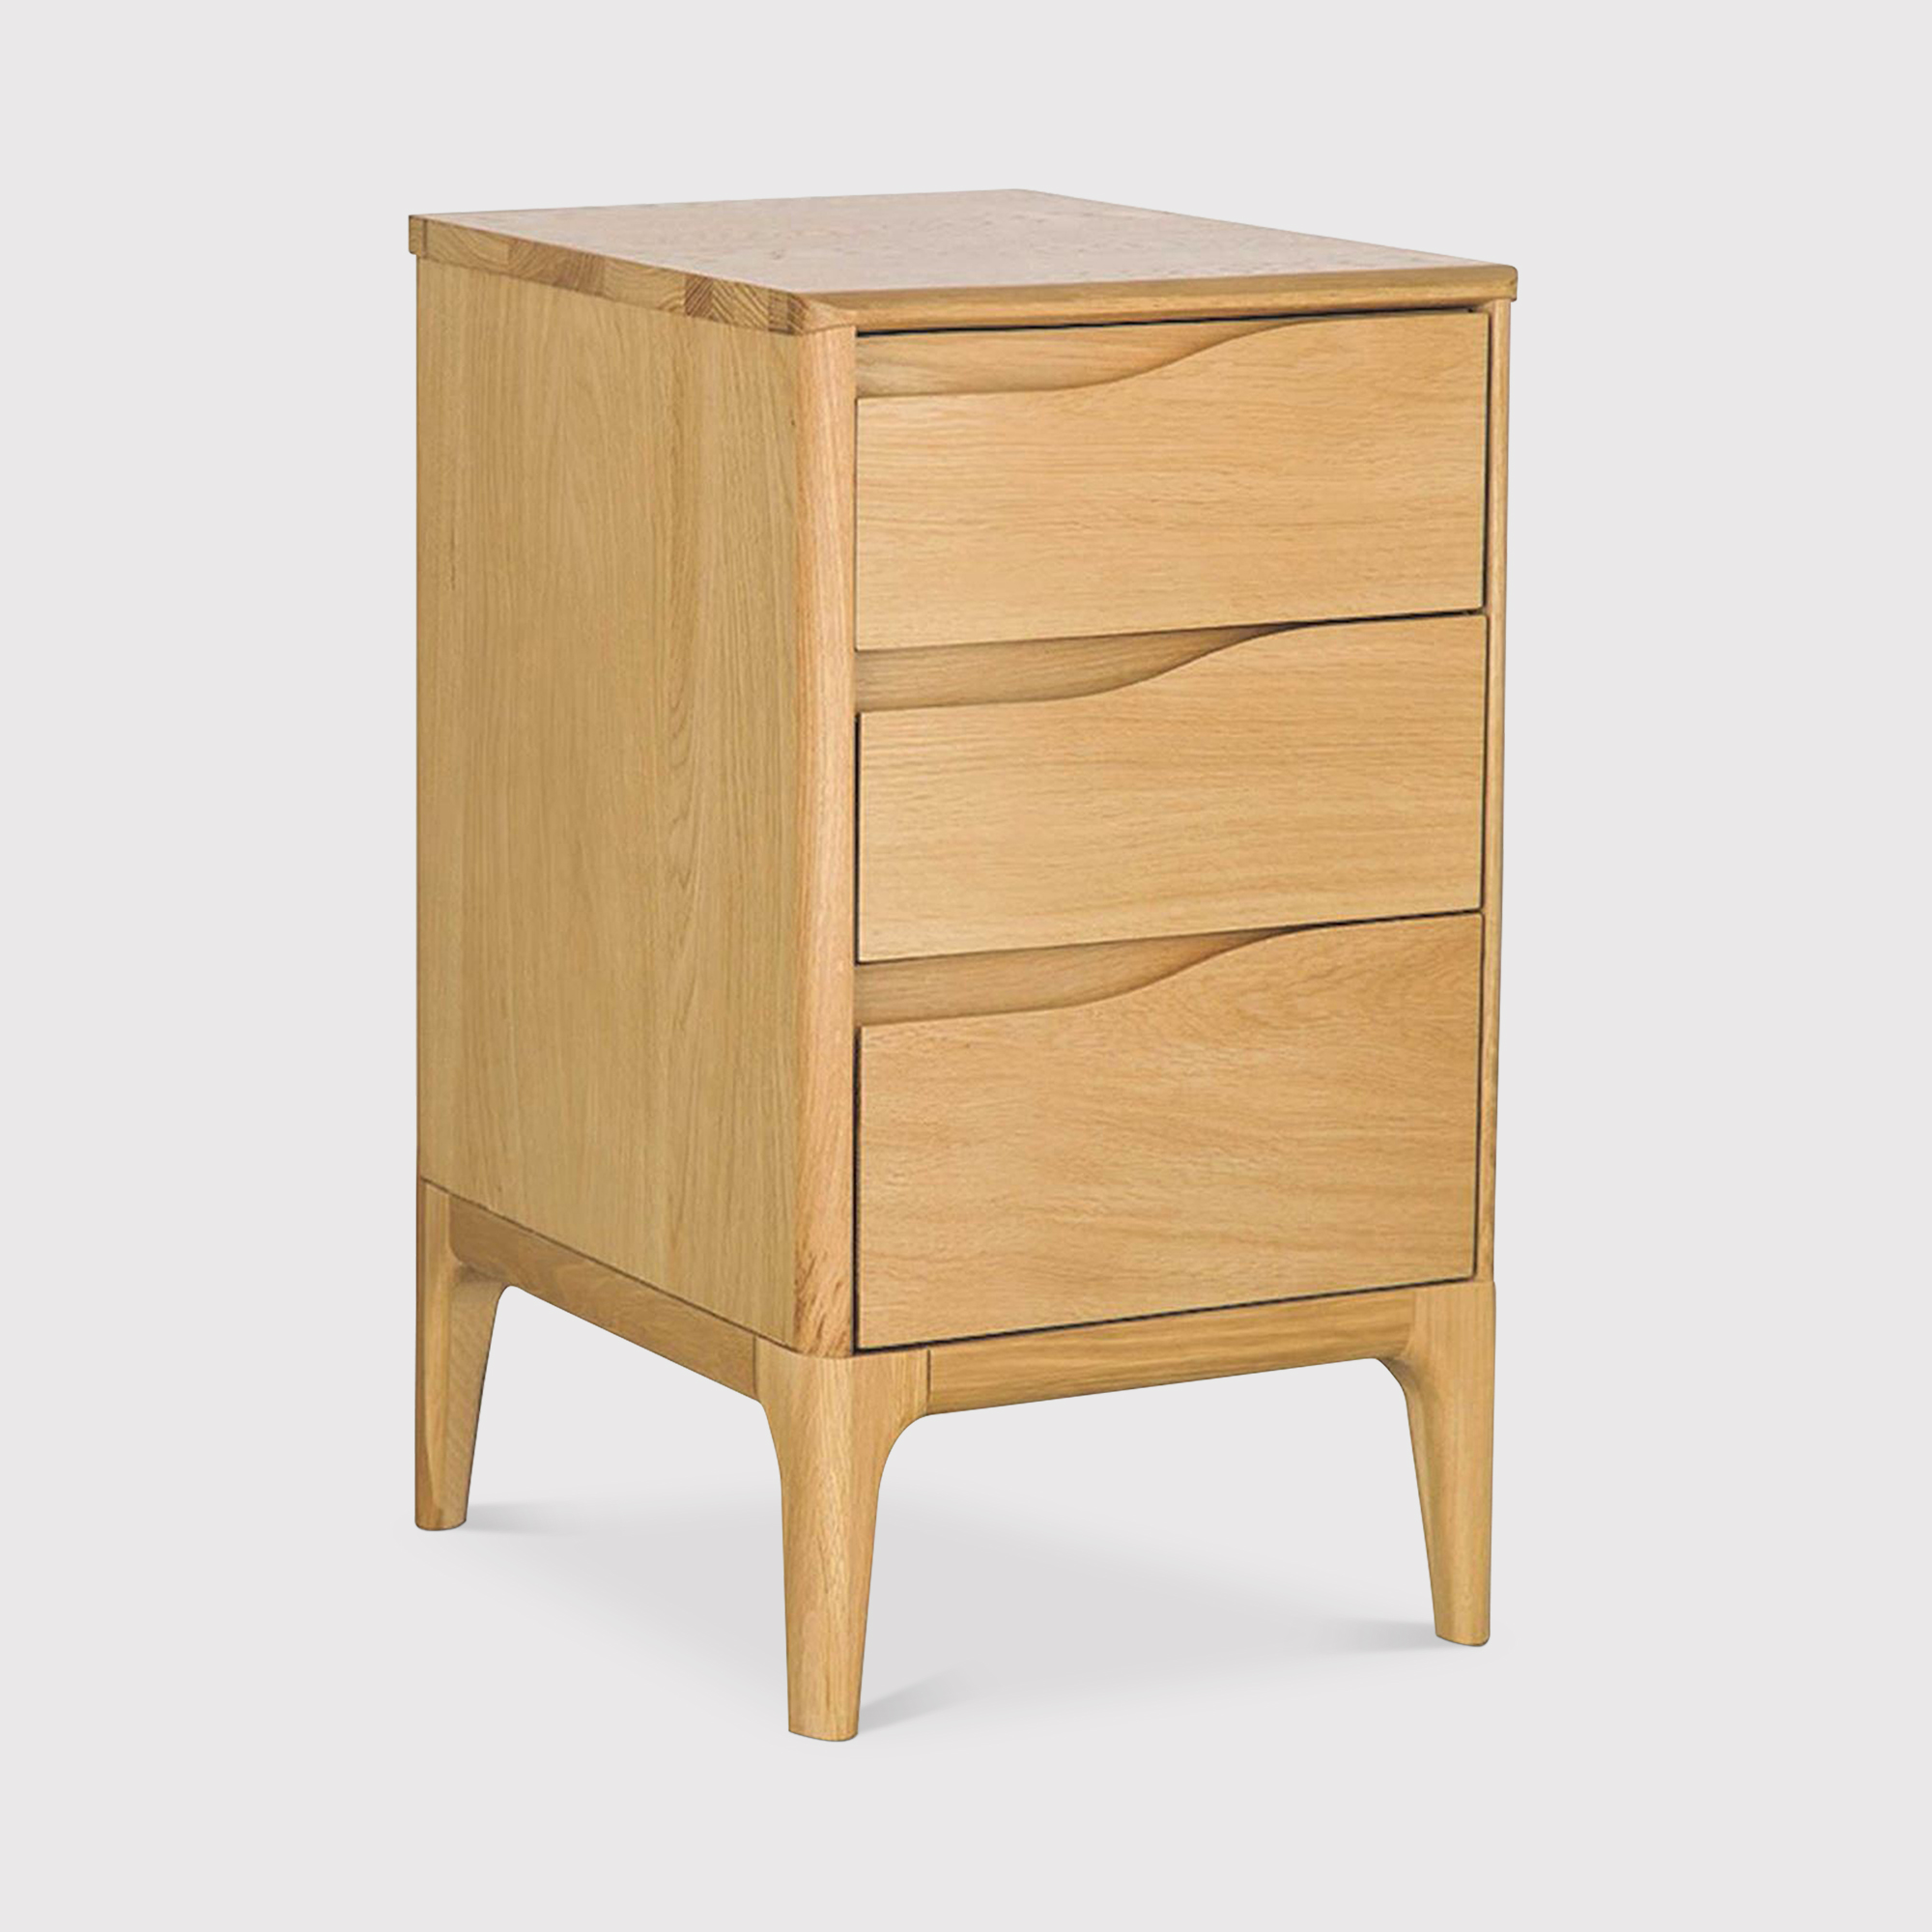 Ercol Rimini 3 Drawer Bedside Cabinet, Neutral Oak | Barker & Stonehouse